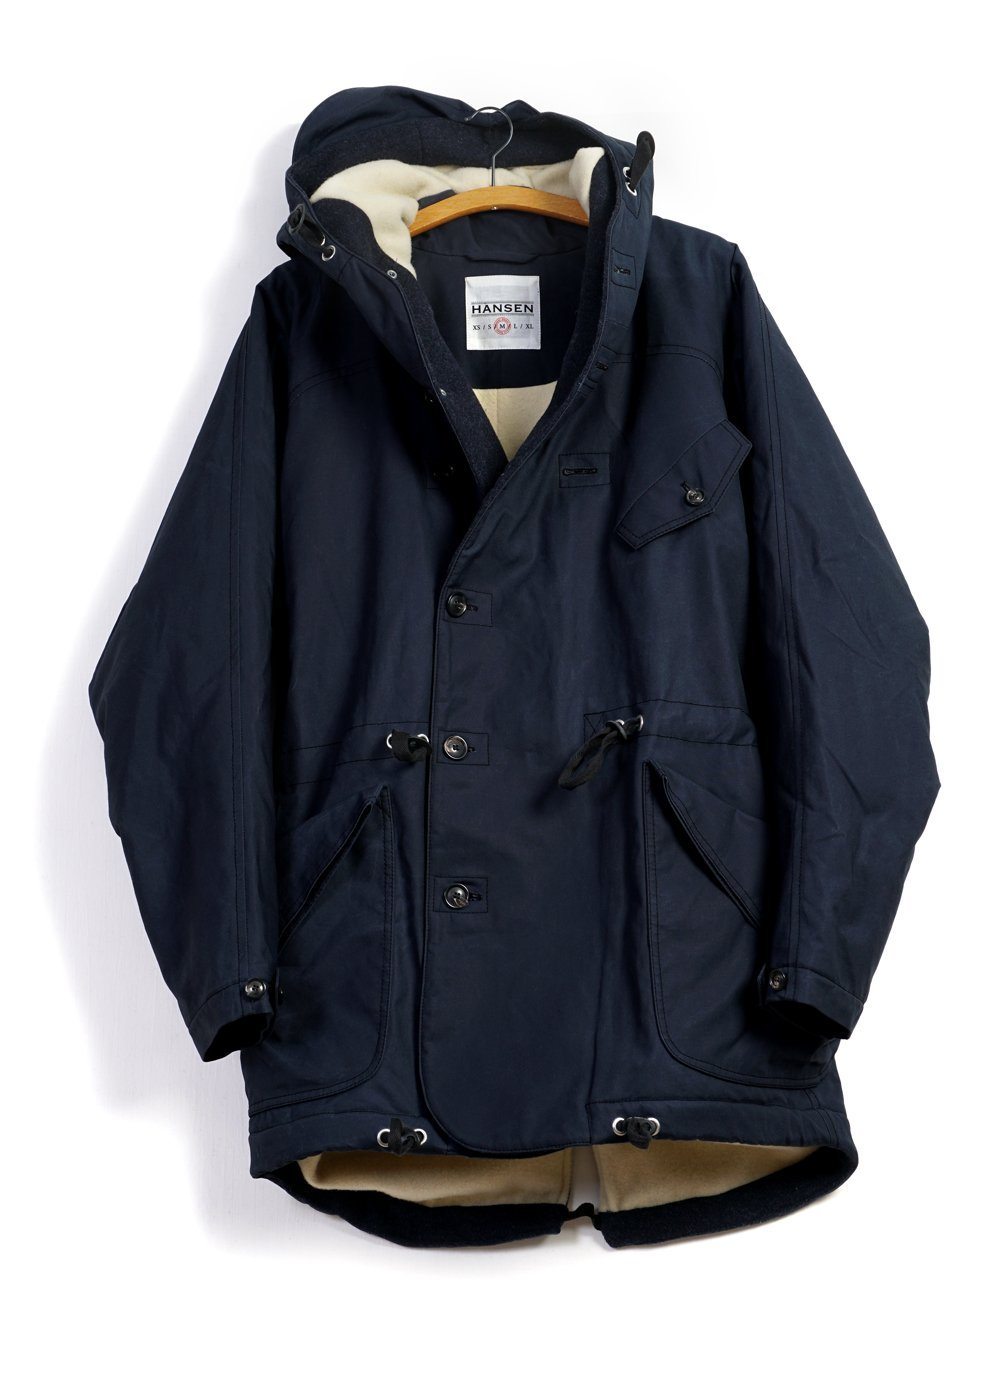 STORM | Hooded Winter Coat | Petroleum | HANSEN Garments